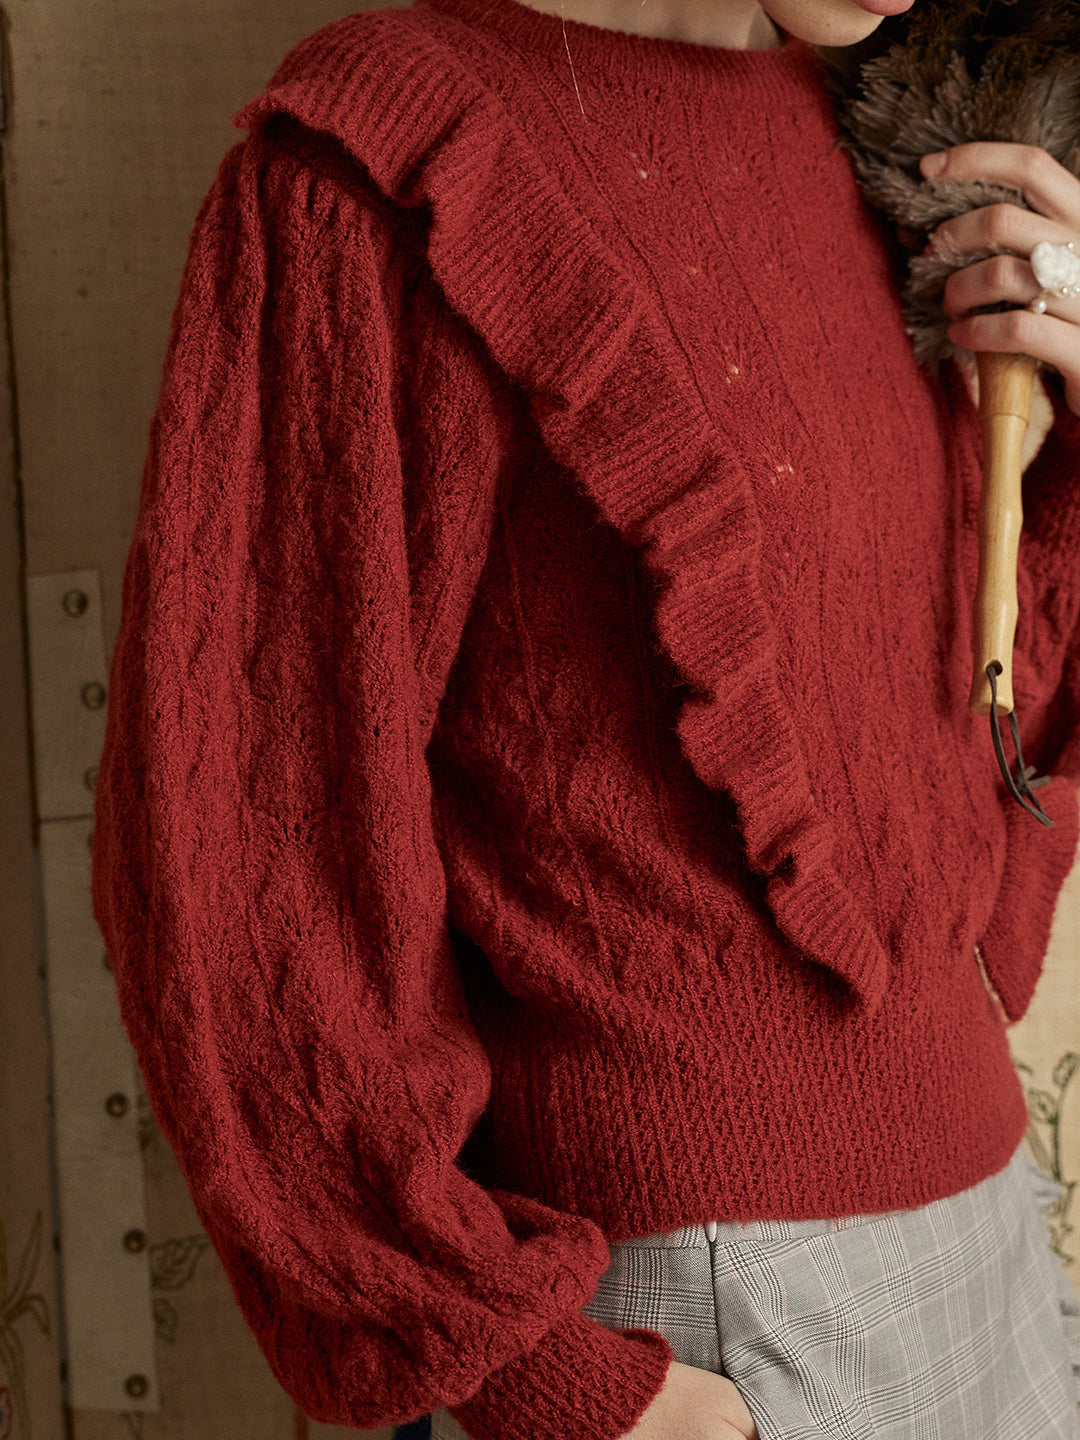 Unlogical Poem Ruffled Crocheted Lantern Sleeve Knitted Sweater